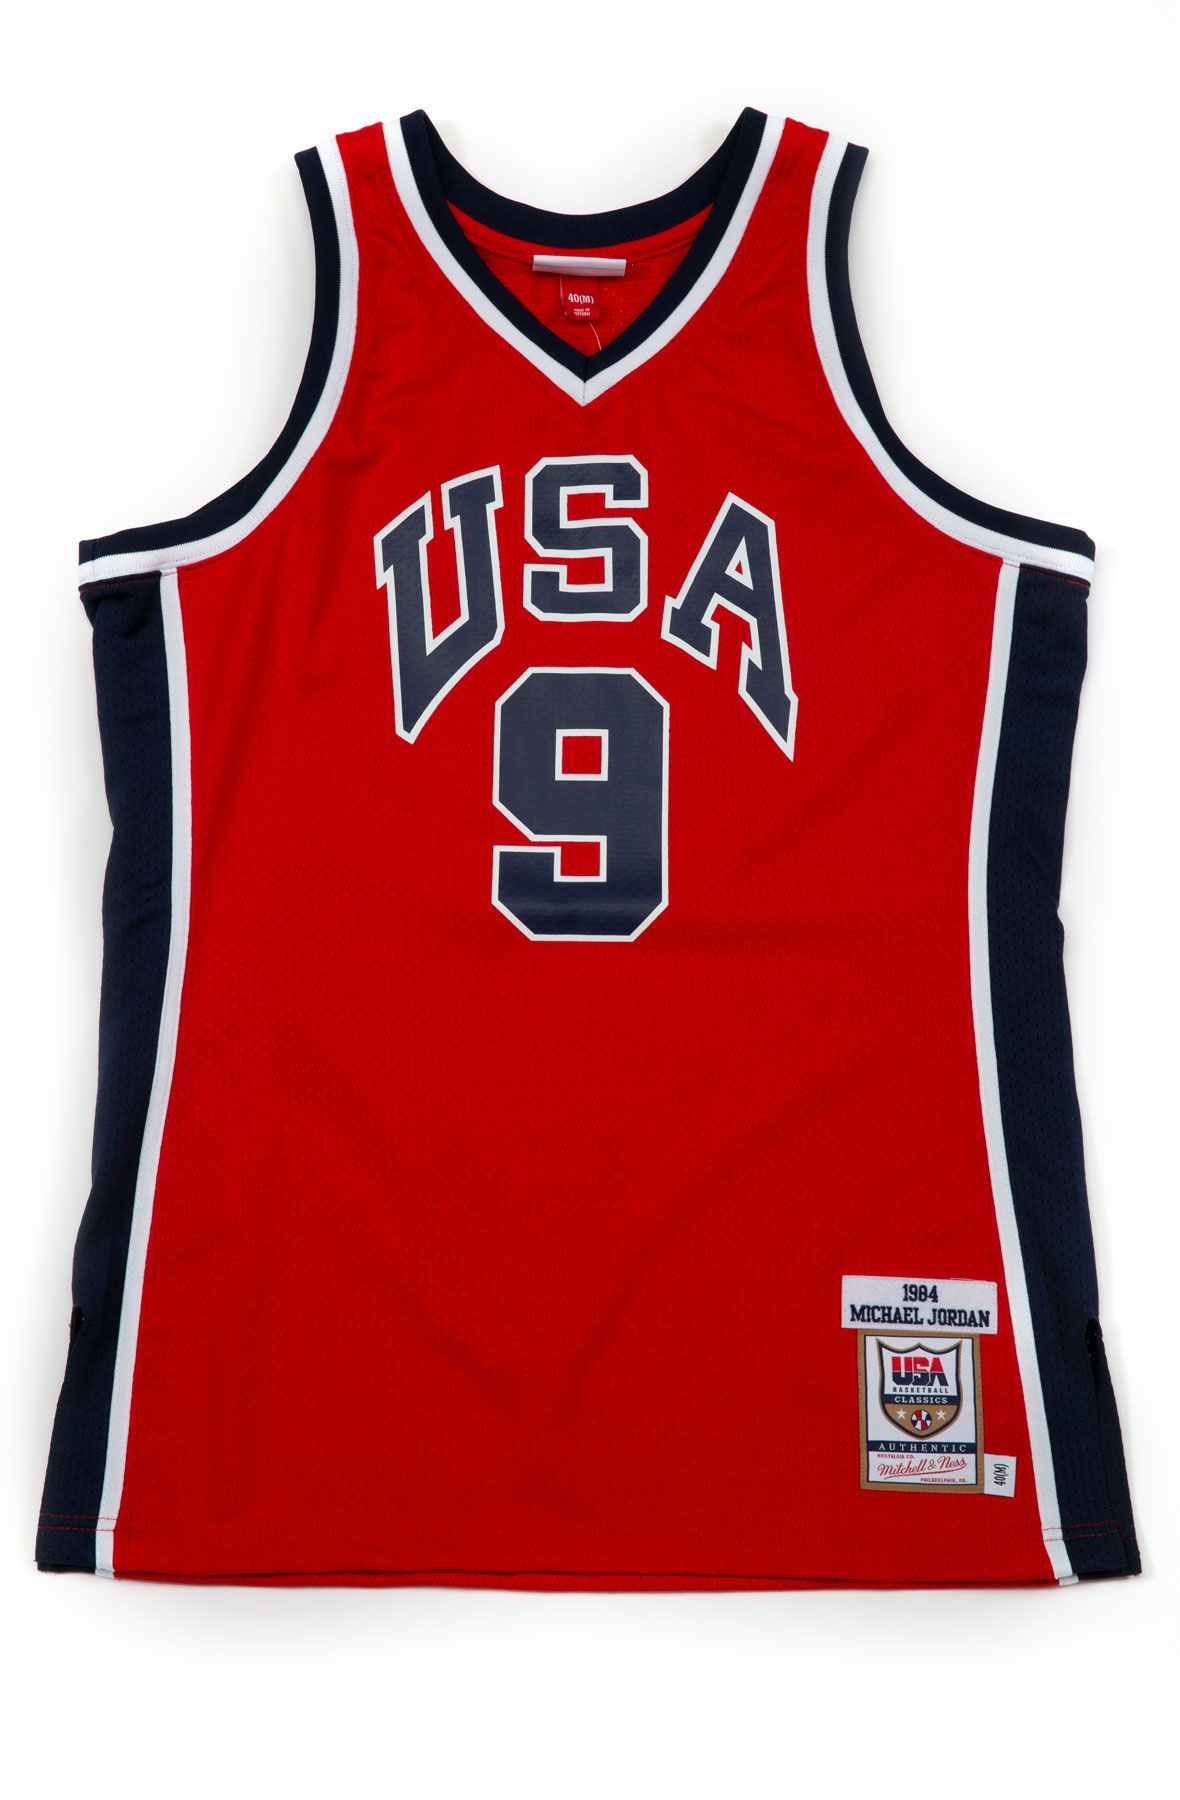 Authentic New Nike Scottie Pippen Portland Trail Blazers Jersey Size 44 (L)